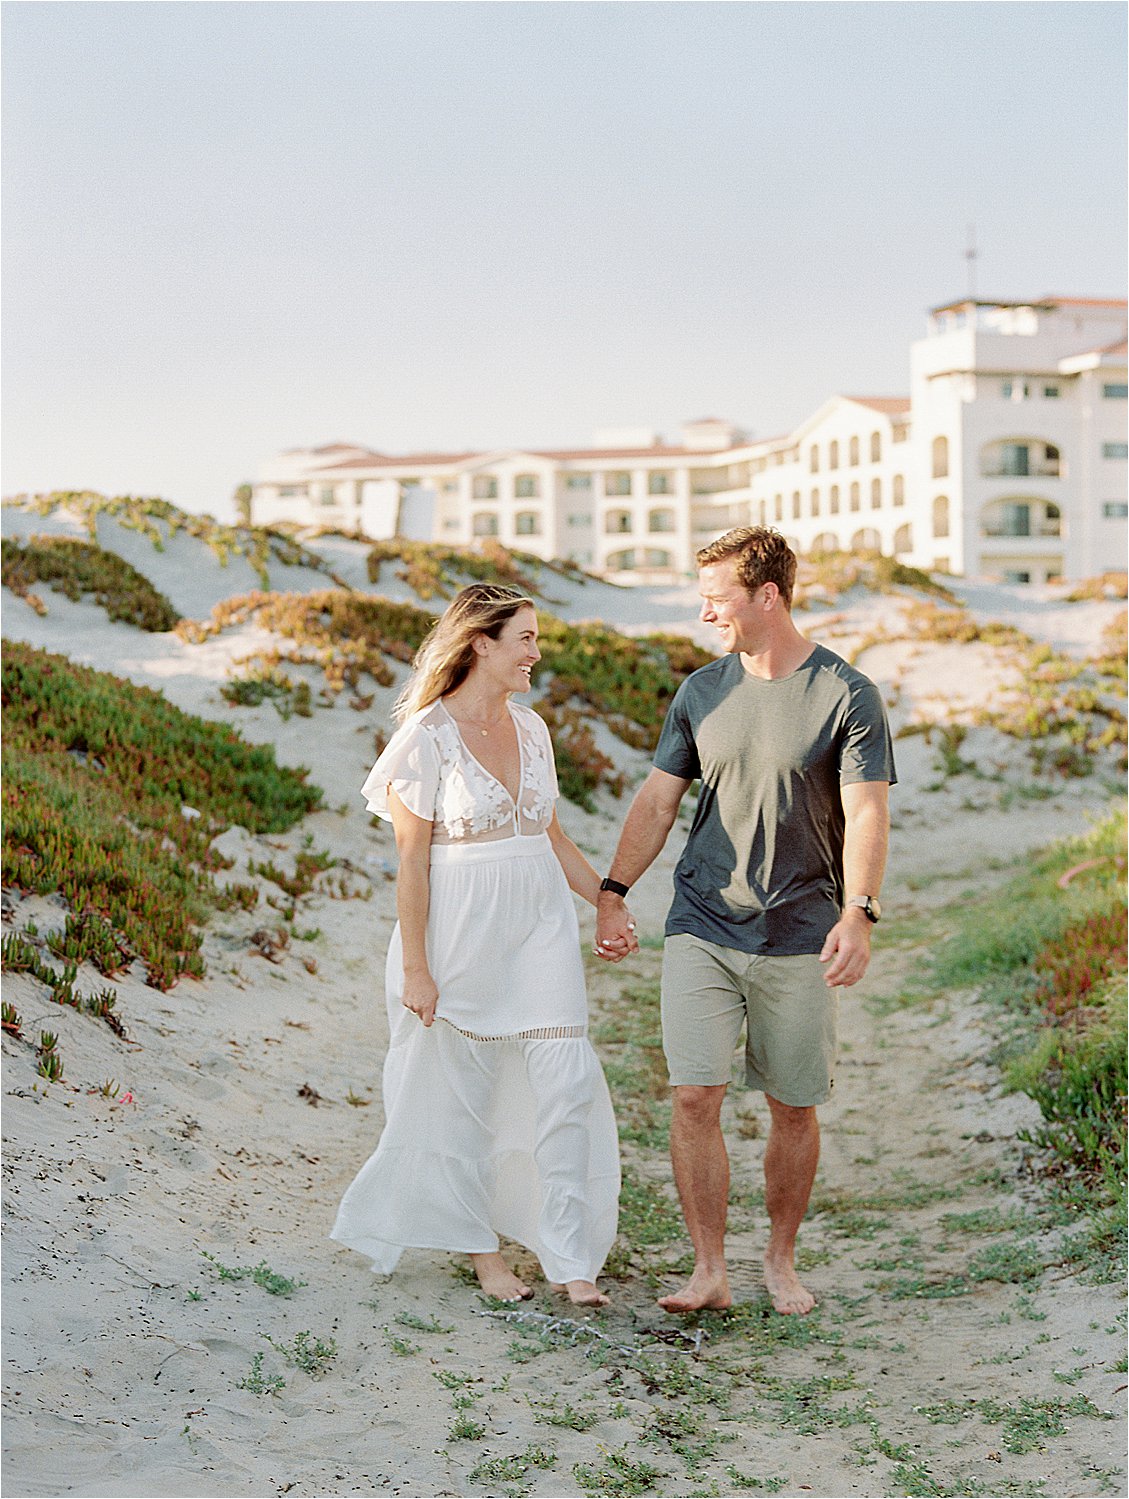 Coronado Island Beach Engagement Session with Southern California and Destination Film Wedding Photographer, Renee Hollingshead